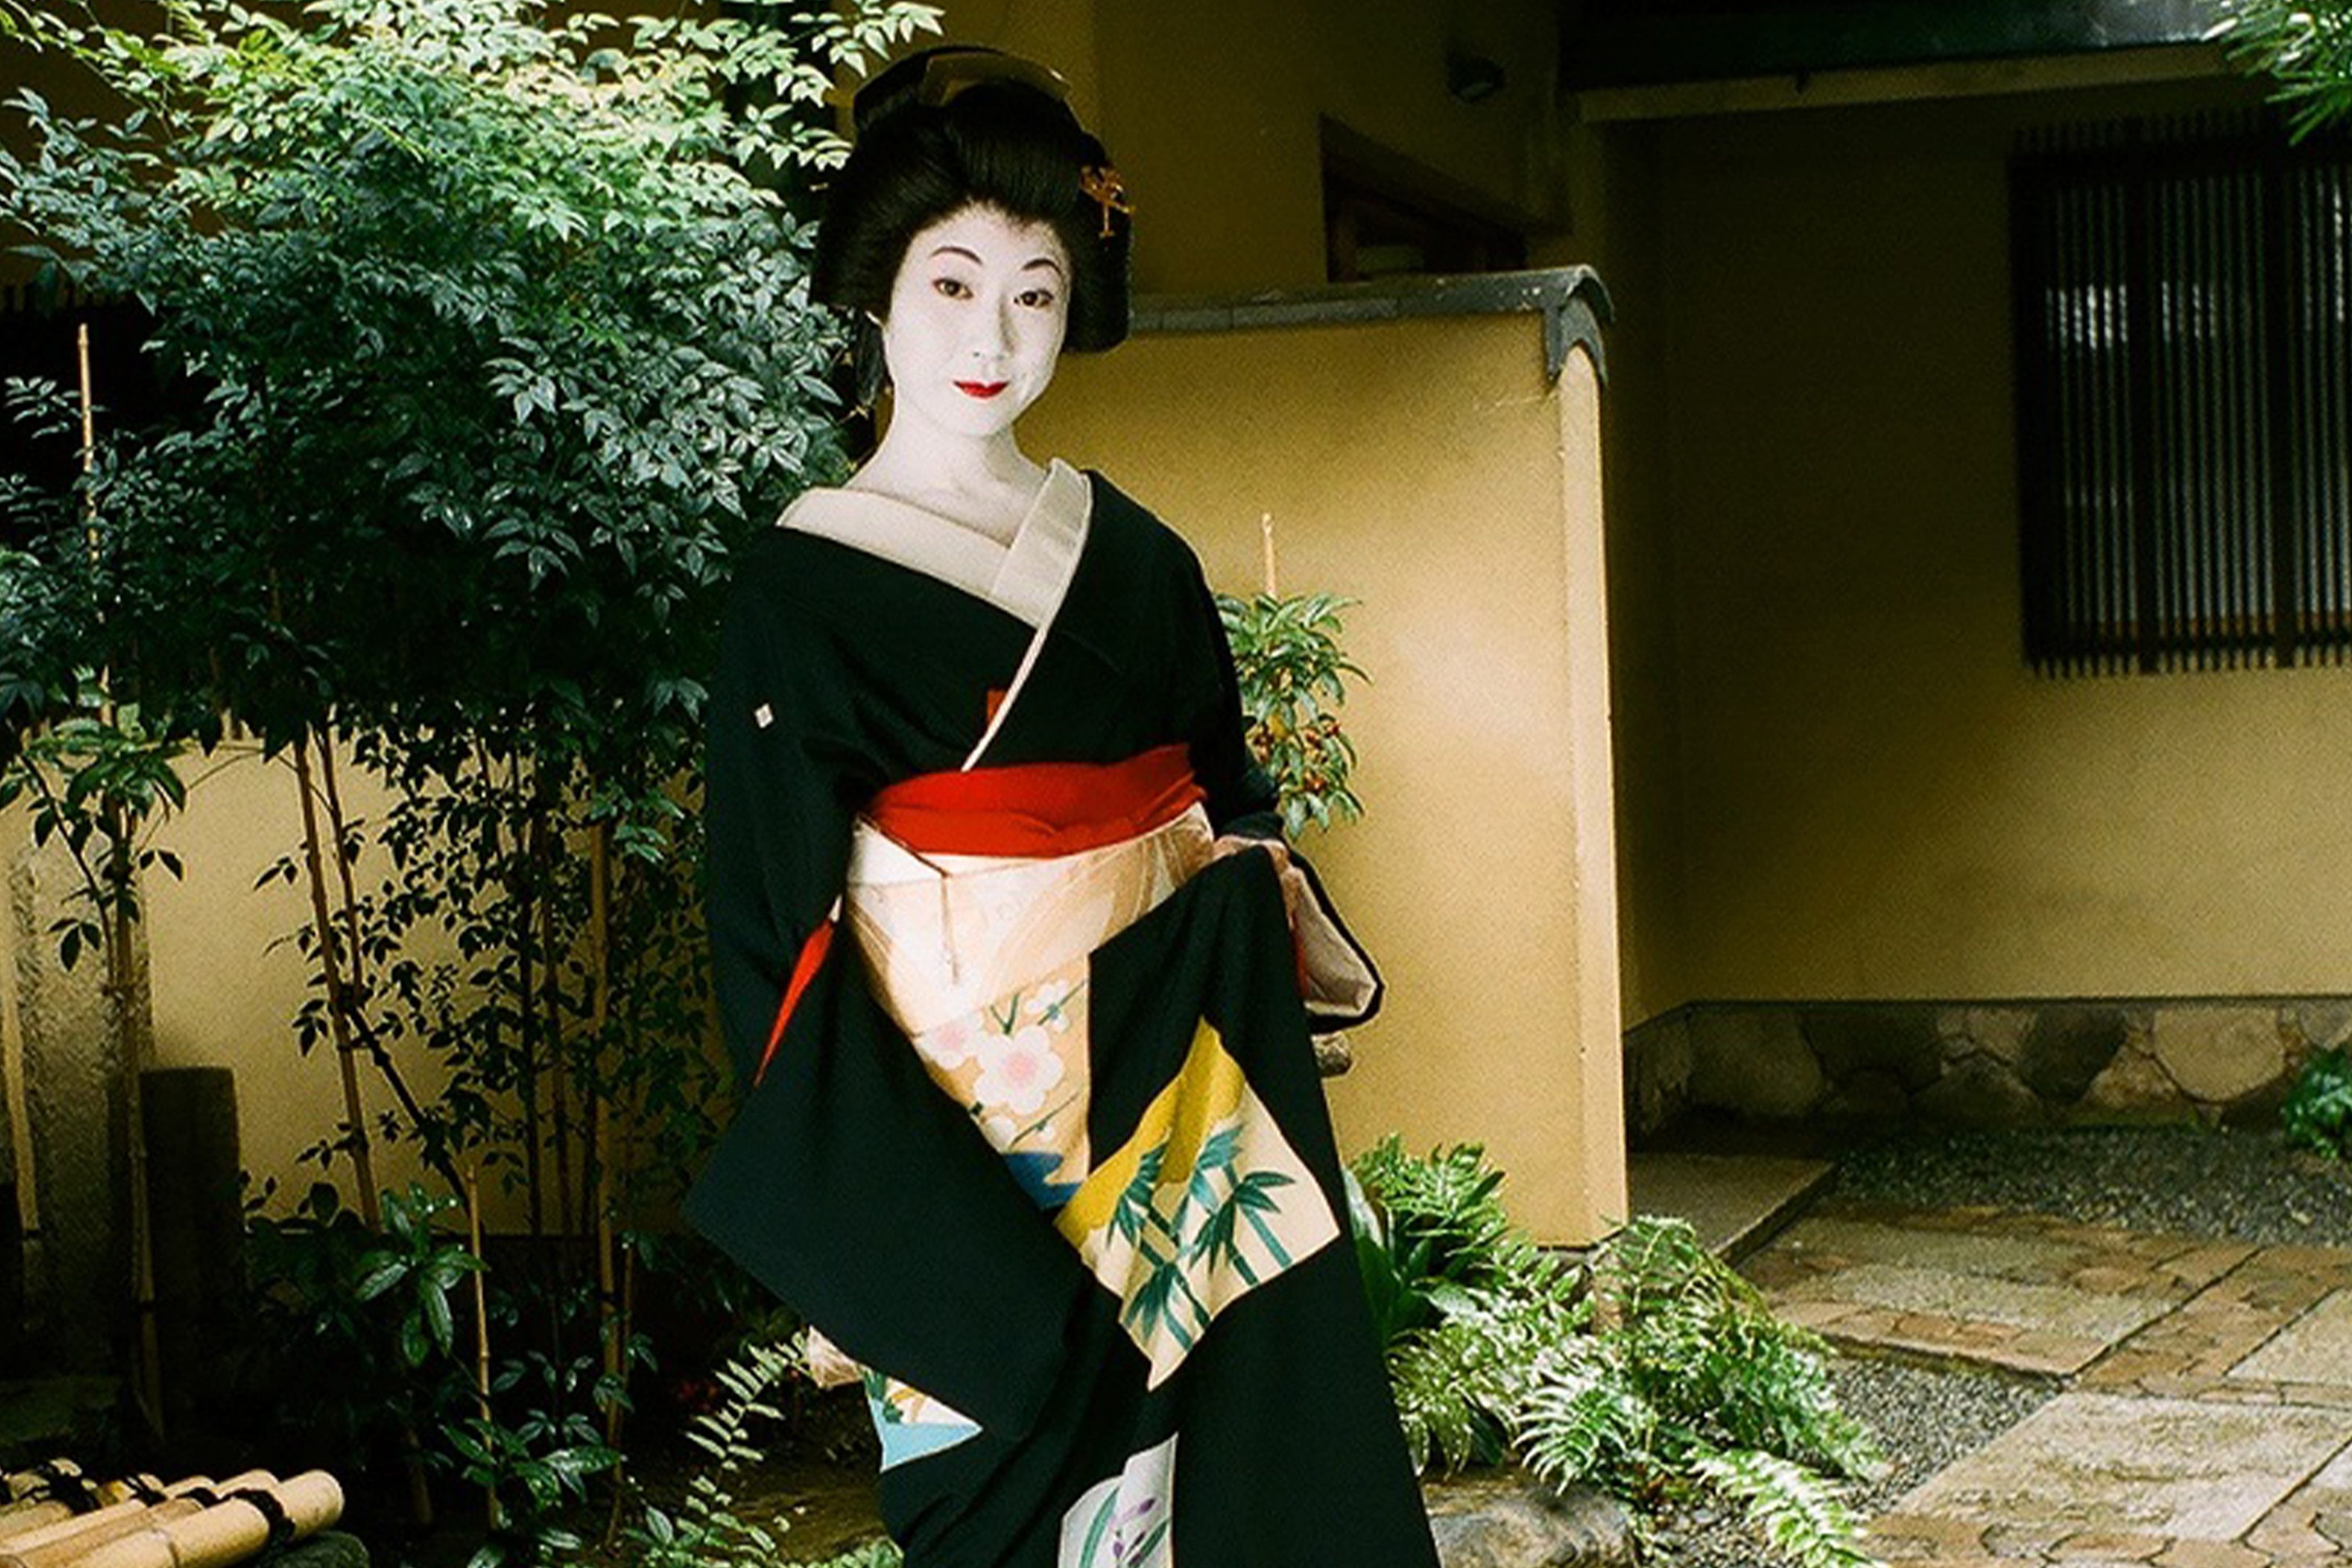 Enjoy a Geisha performance with Kaiseki meal